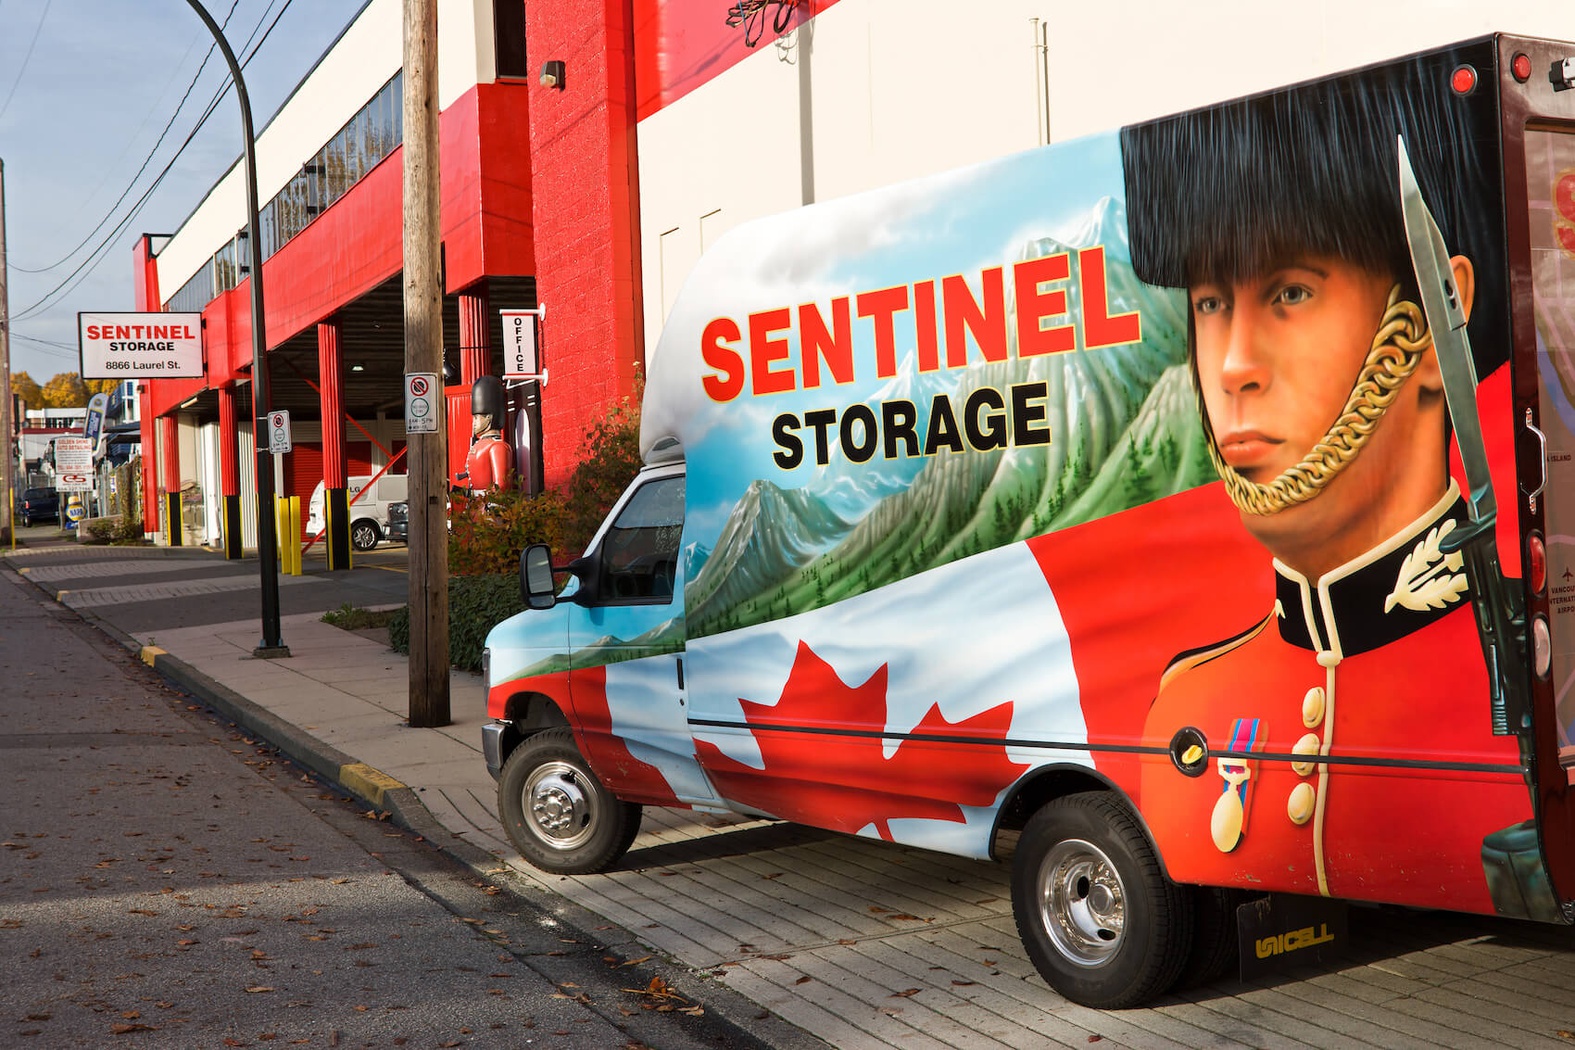 Sentinel Storage - Vancouver Vancouver (604)260-1983